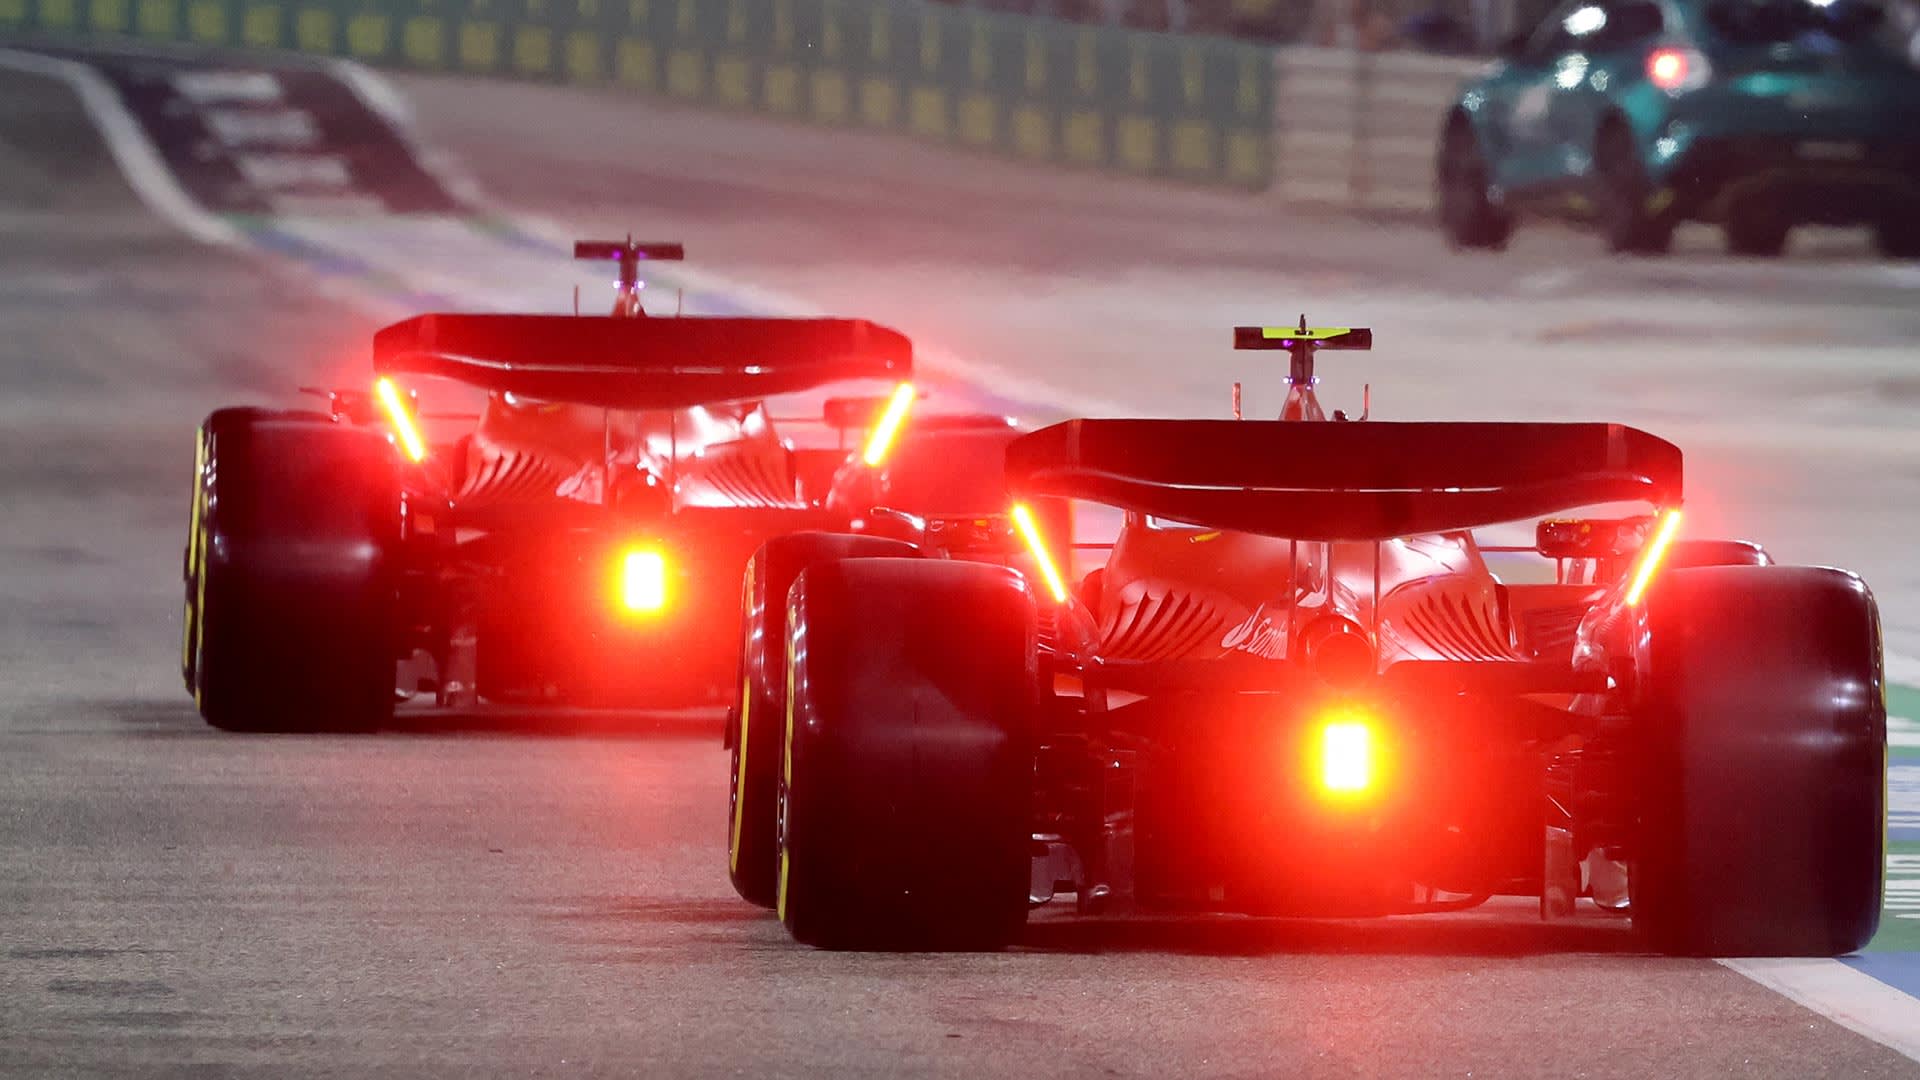 Aston Martin aiming high with 2023 Formula 1 car as Fernando Alonso hails  'special' new team, F1 News